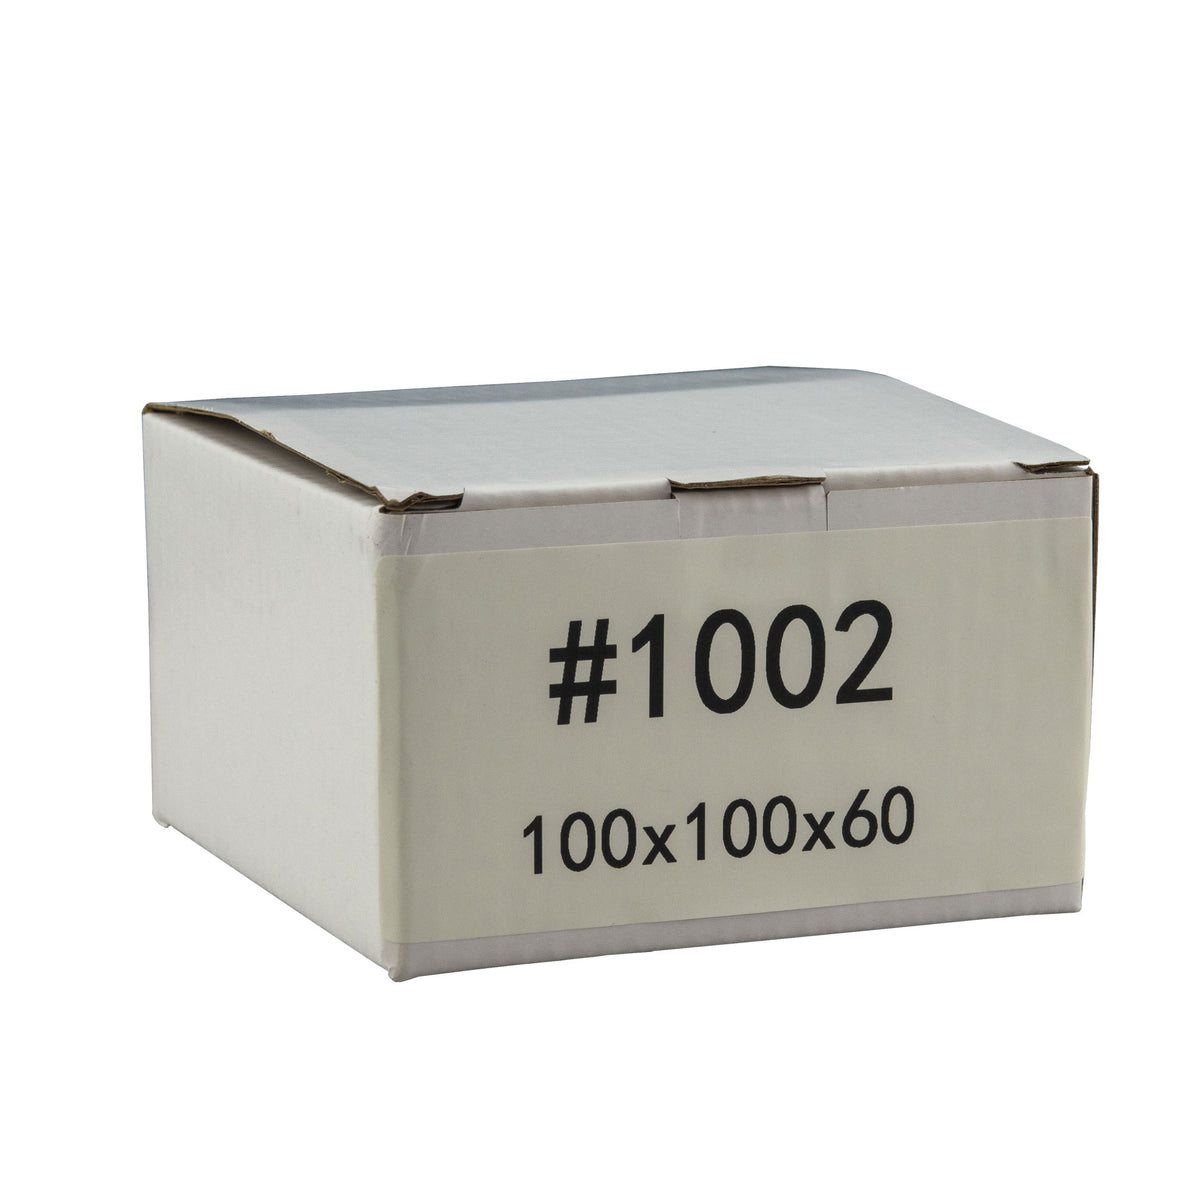 100mm x 100mm x 60mm White Carton Cardboard Shipping Box (#1002)